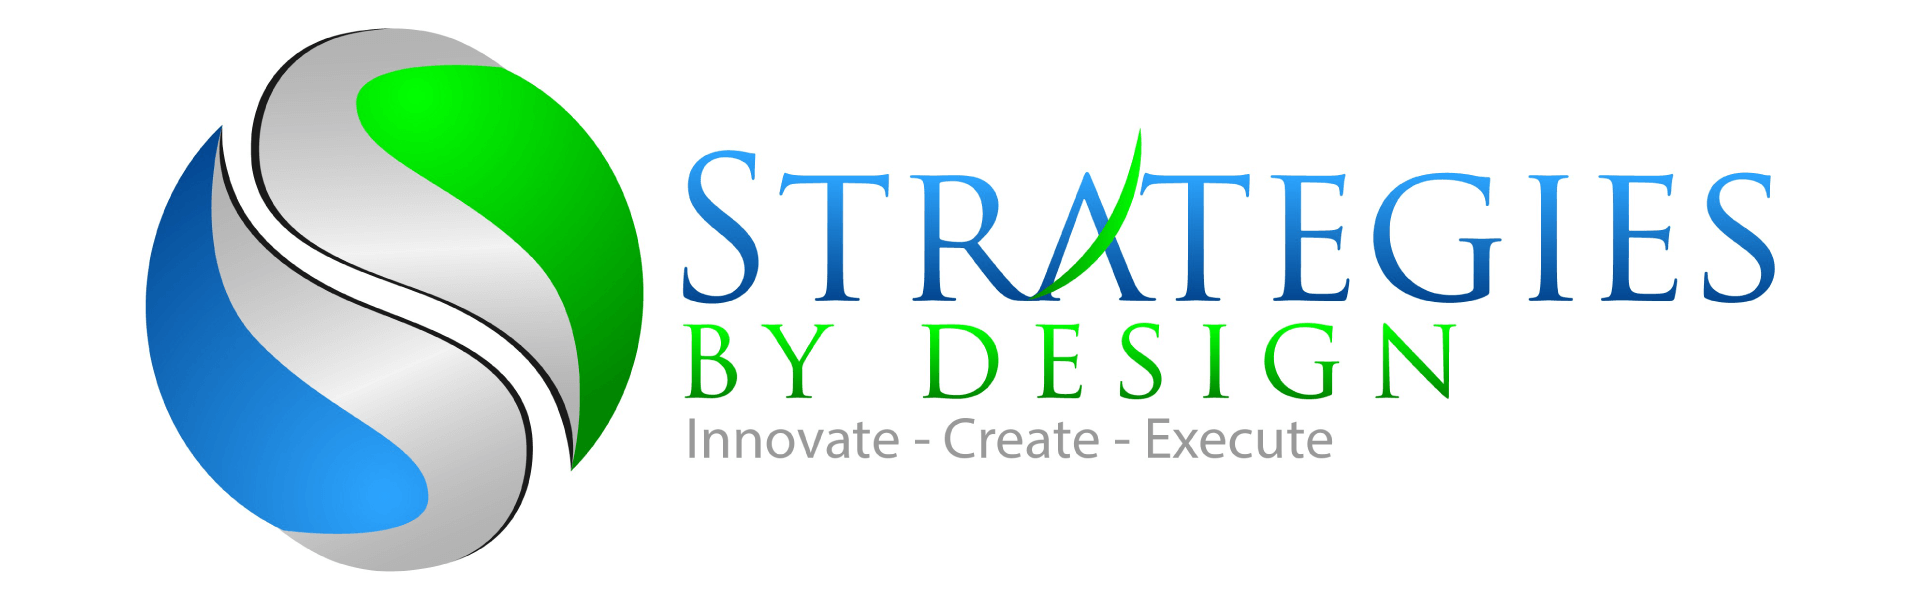 Strategies by Design